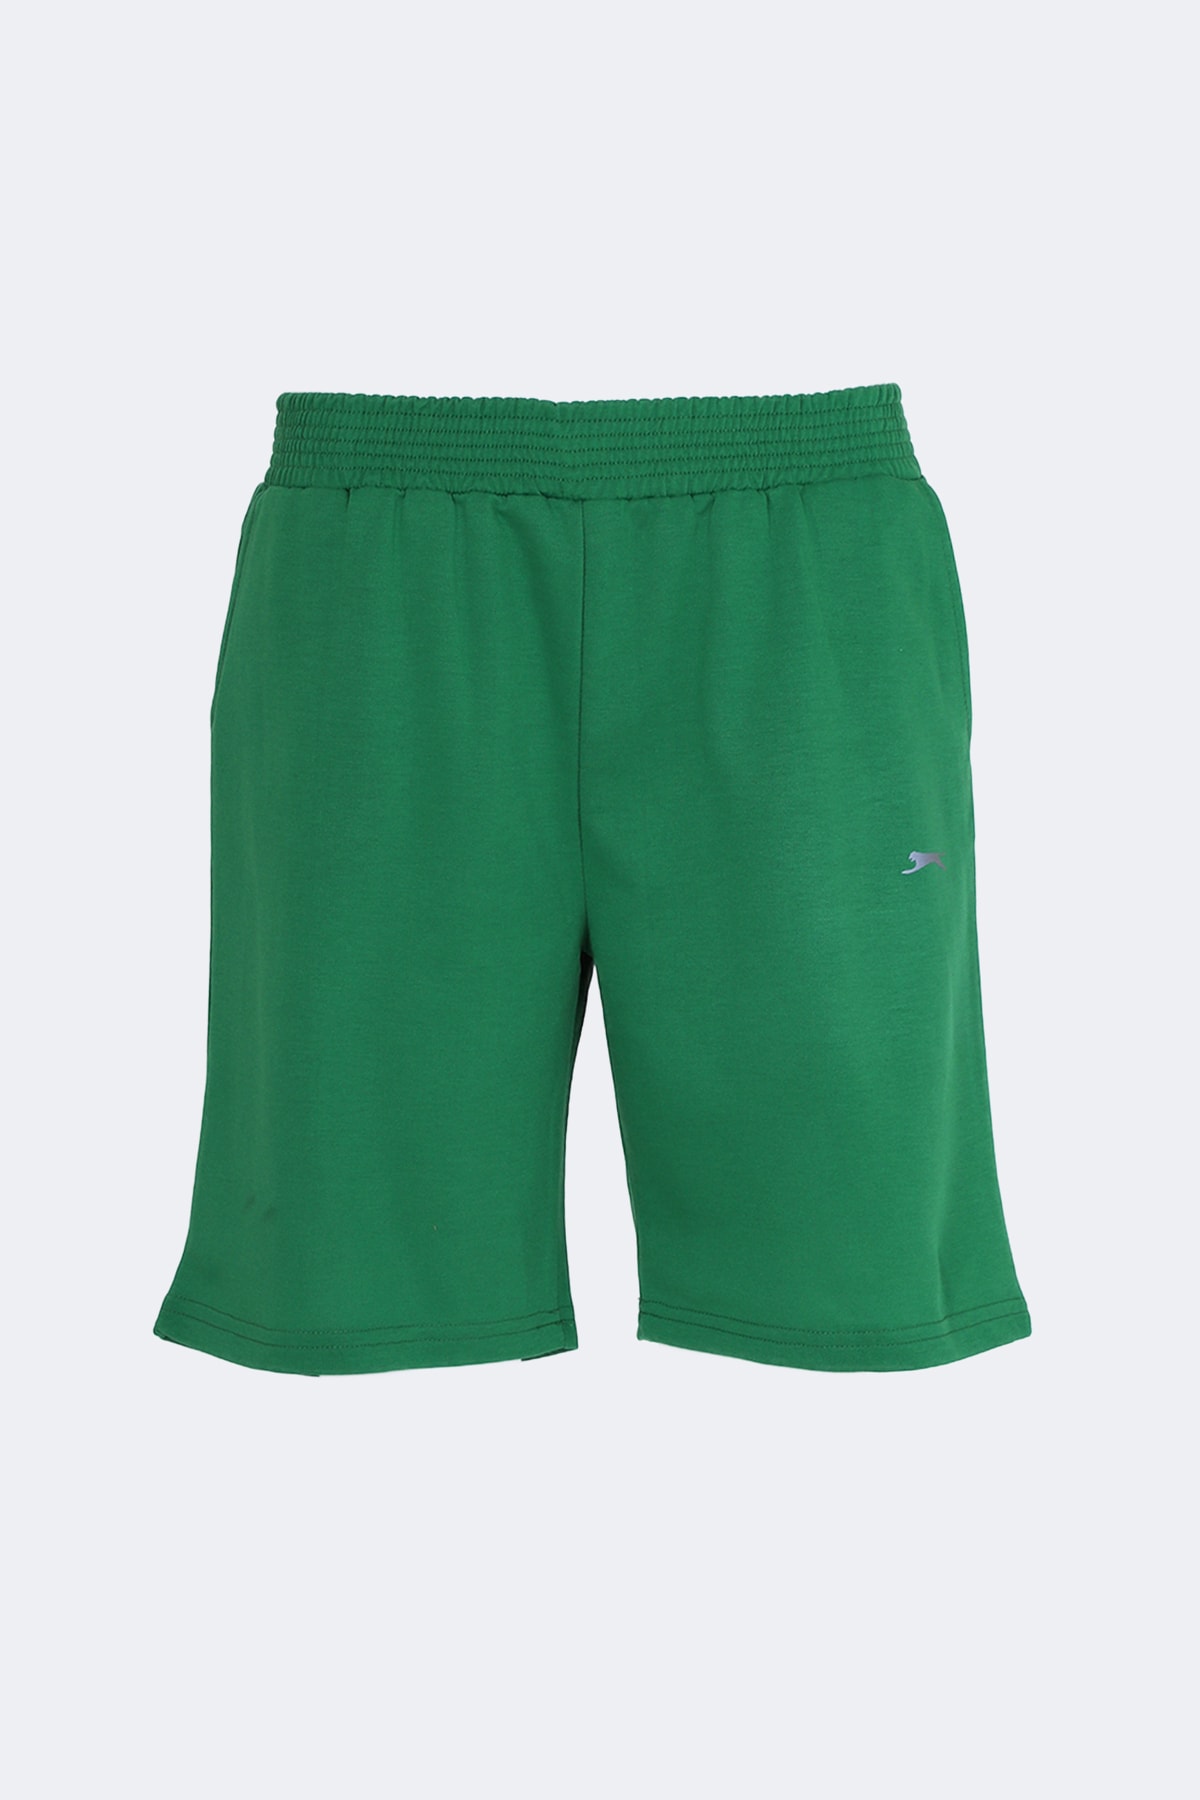 Levně Slazenger Isadore Women's Shorts Green